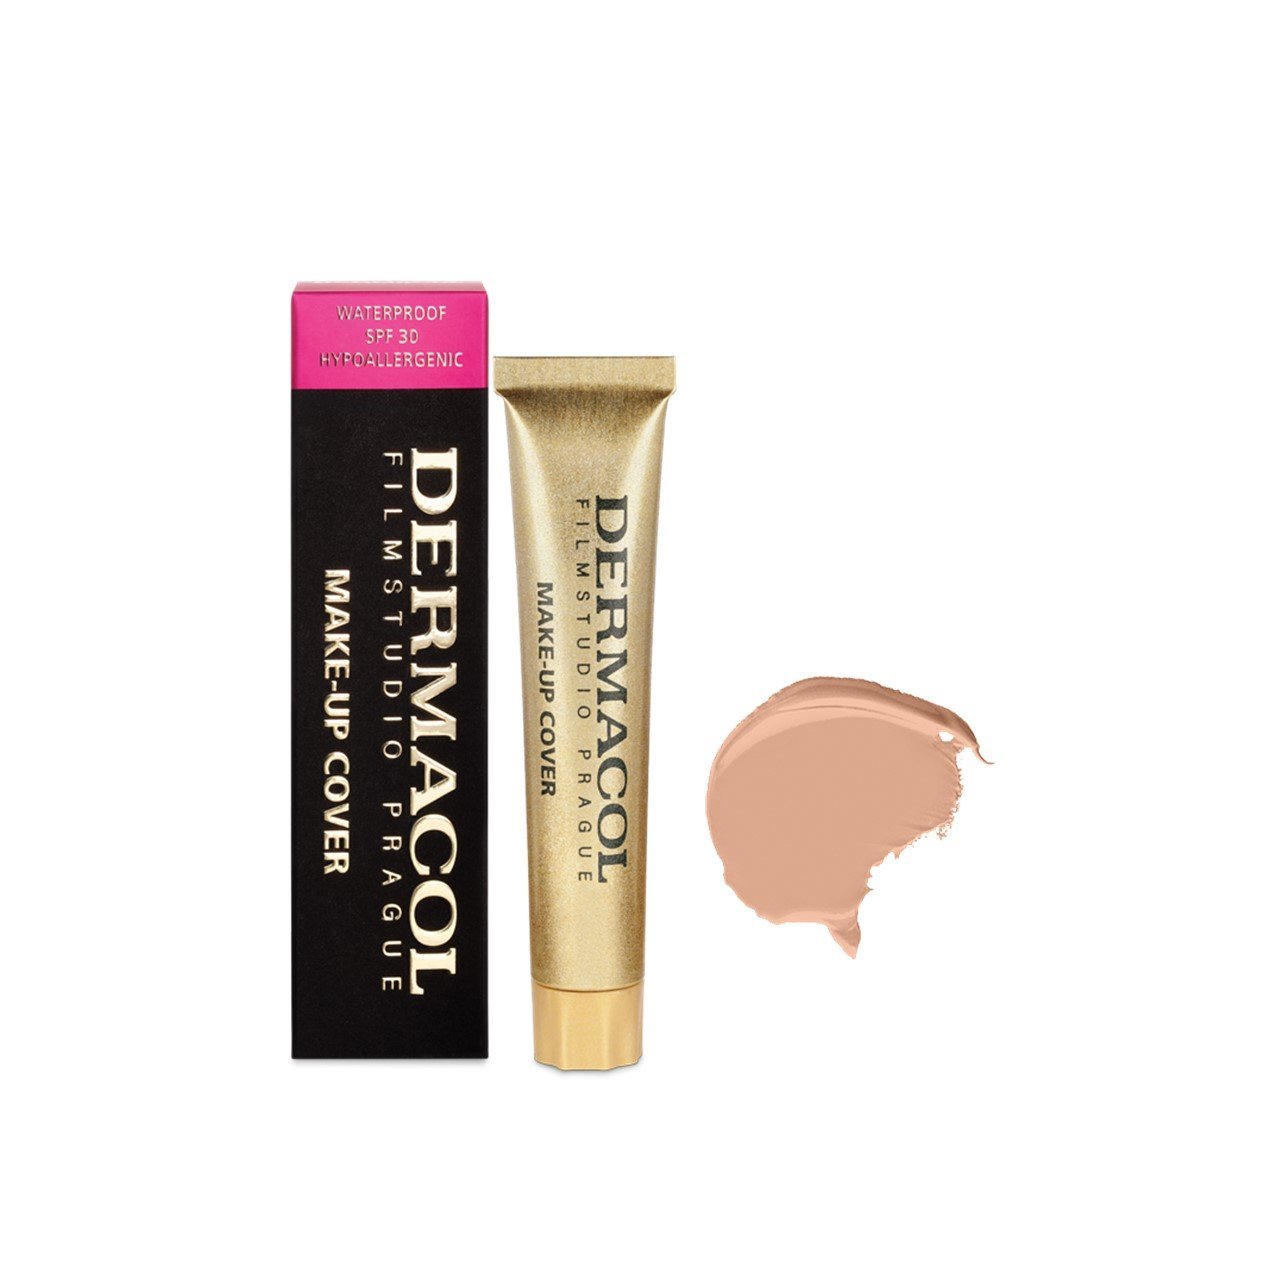 Buy Dermacol Make-Up Cover 211 30g (1.06oz) · USA